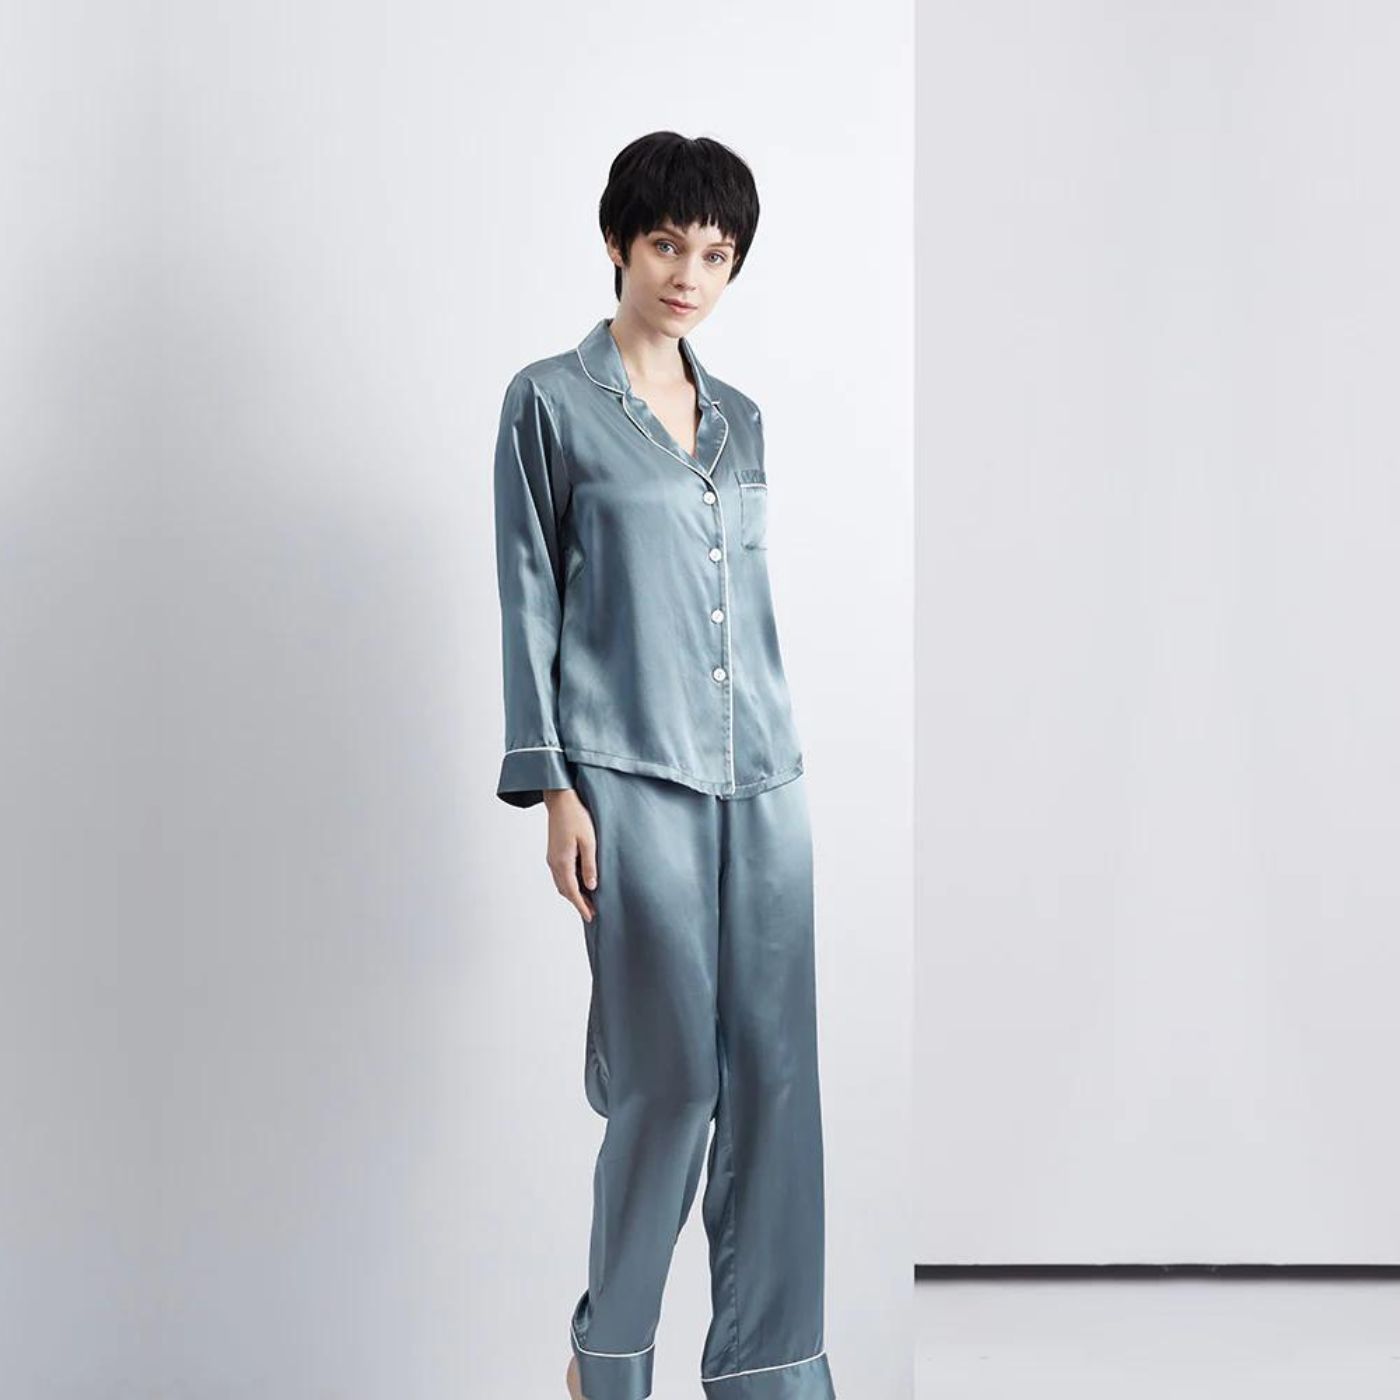 100% Mulberry Silk Real Pure Full Length Pyjamas Pajamas Set trousers shirt two pieces for Women 22 Momme MM Luxury nightwear sleepwear ladies grey light blue petrol